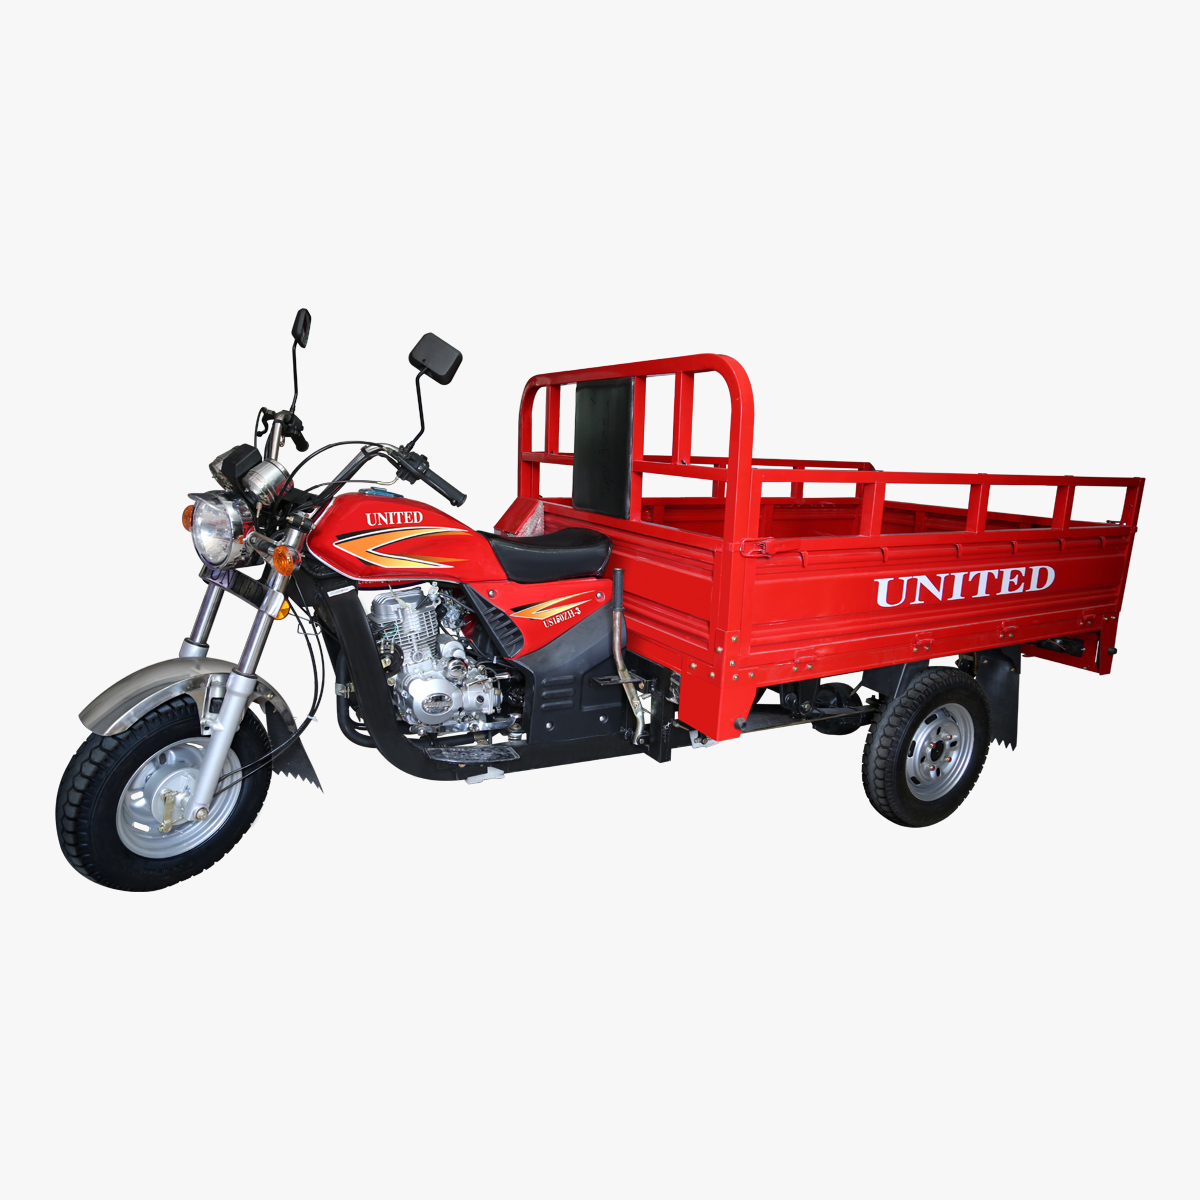 United Loader 150cc Price in Pakistan